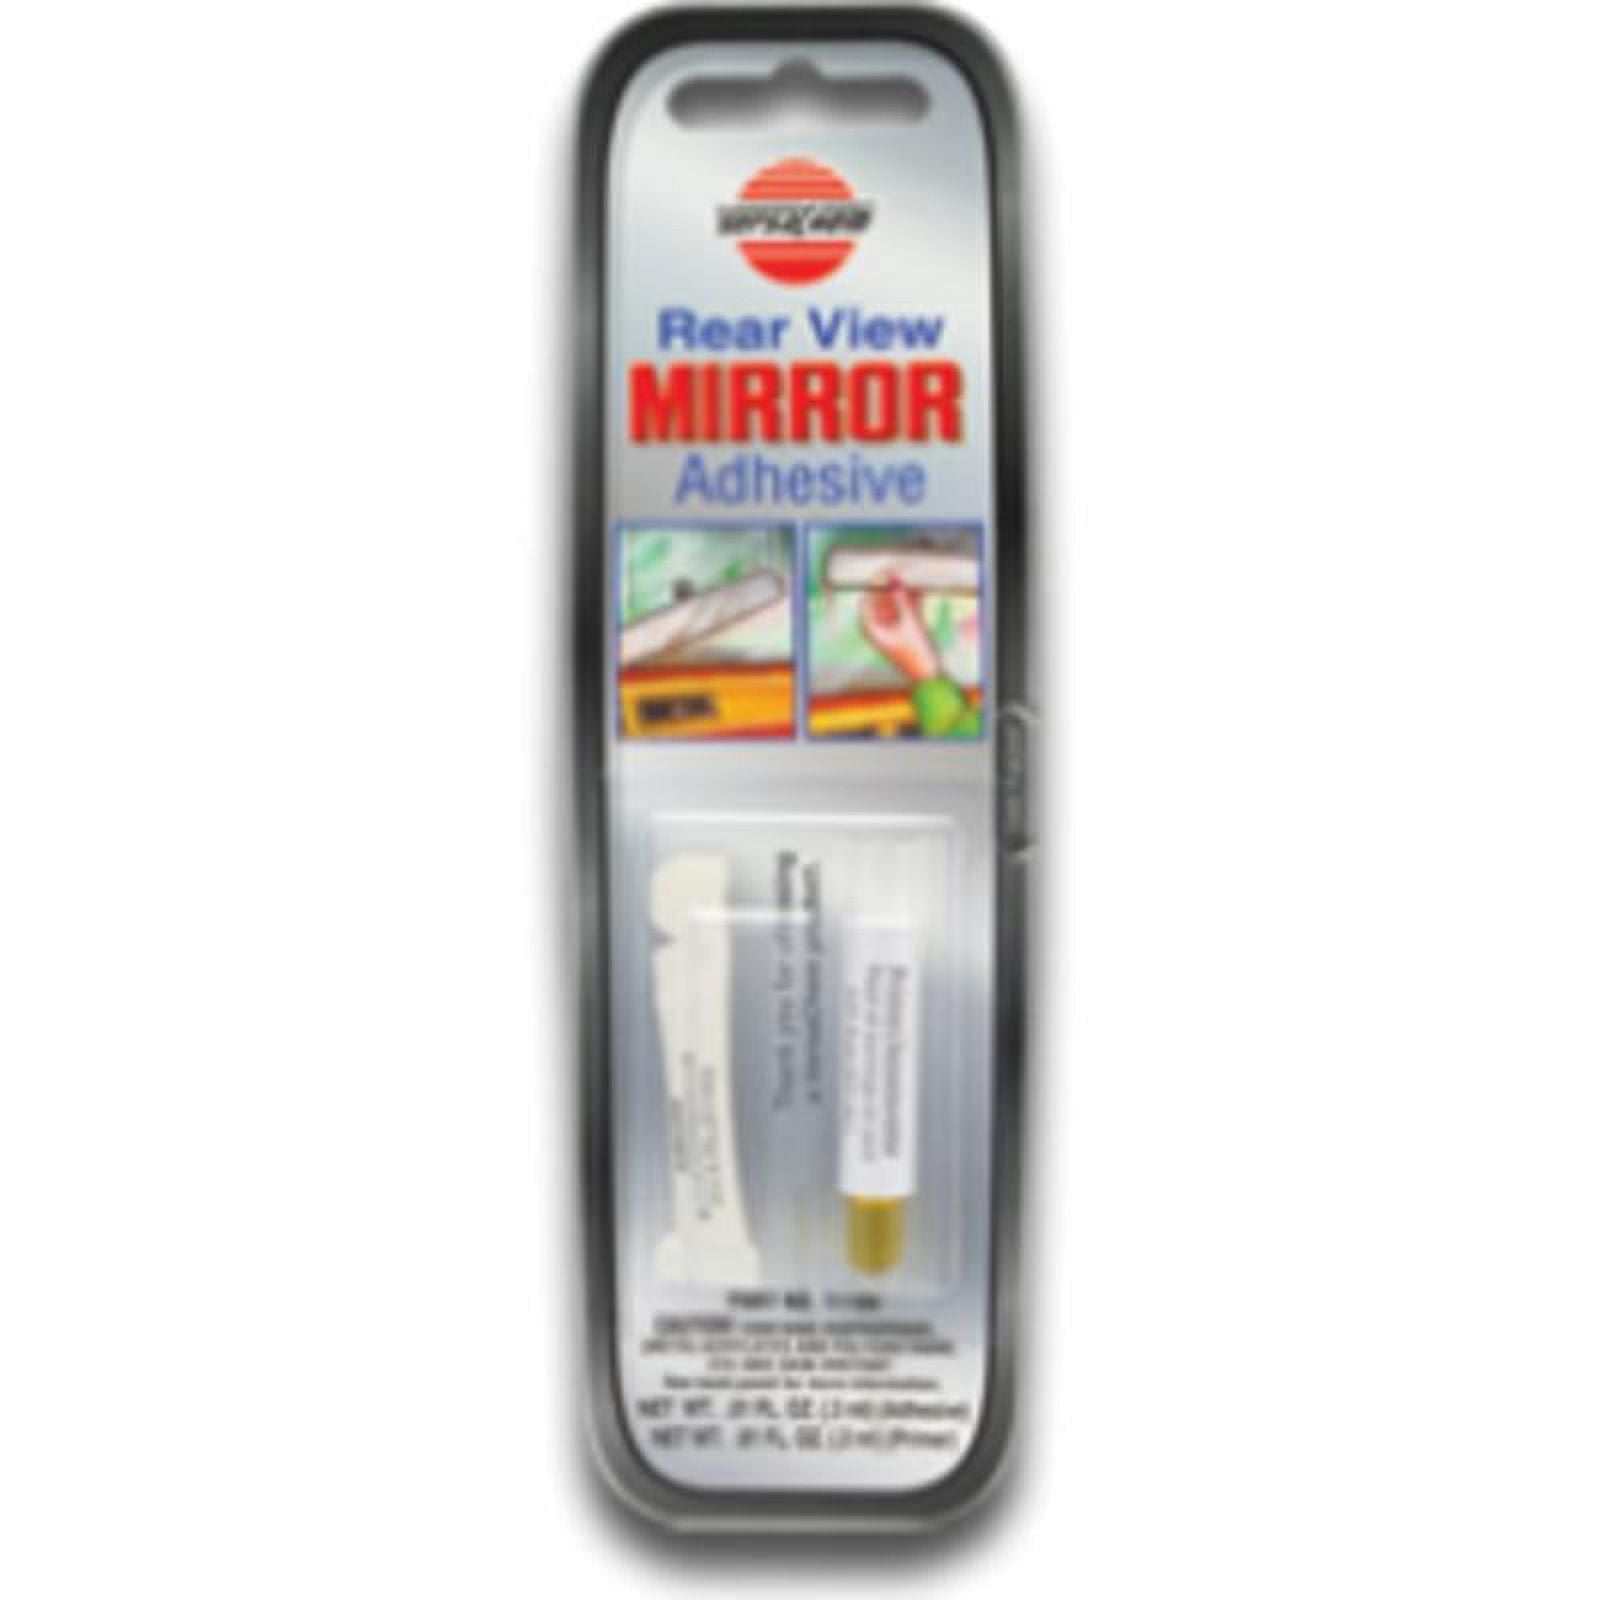 Rear View Mirror Adhesive, Professional Strength, .01-fl. oz., Super Glue, 15193